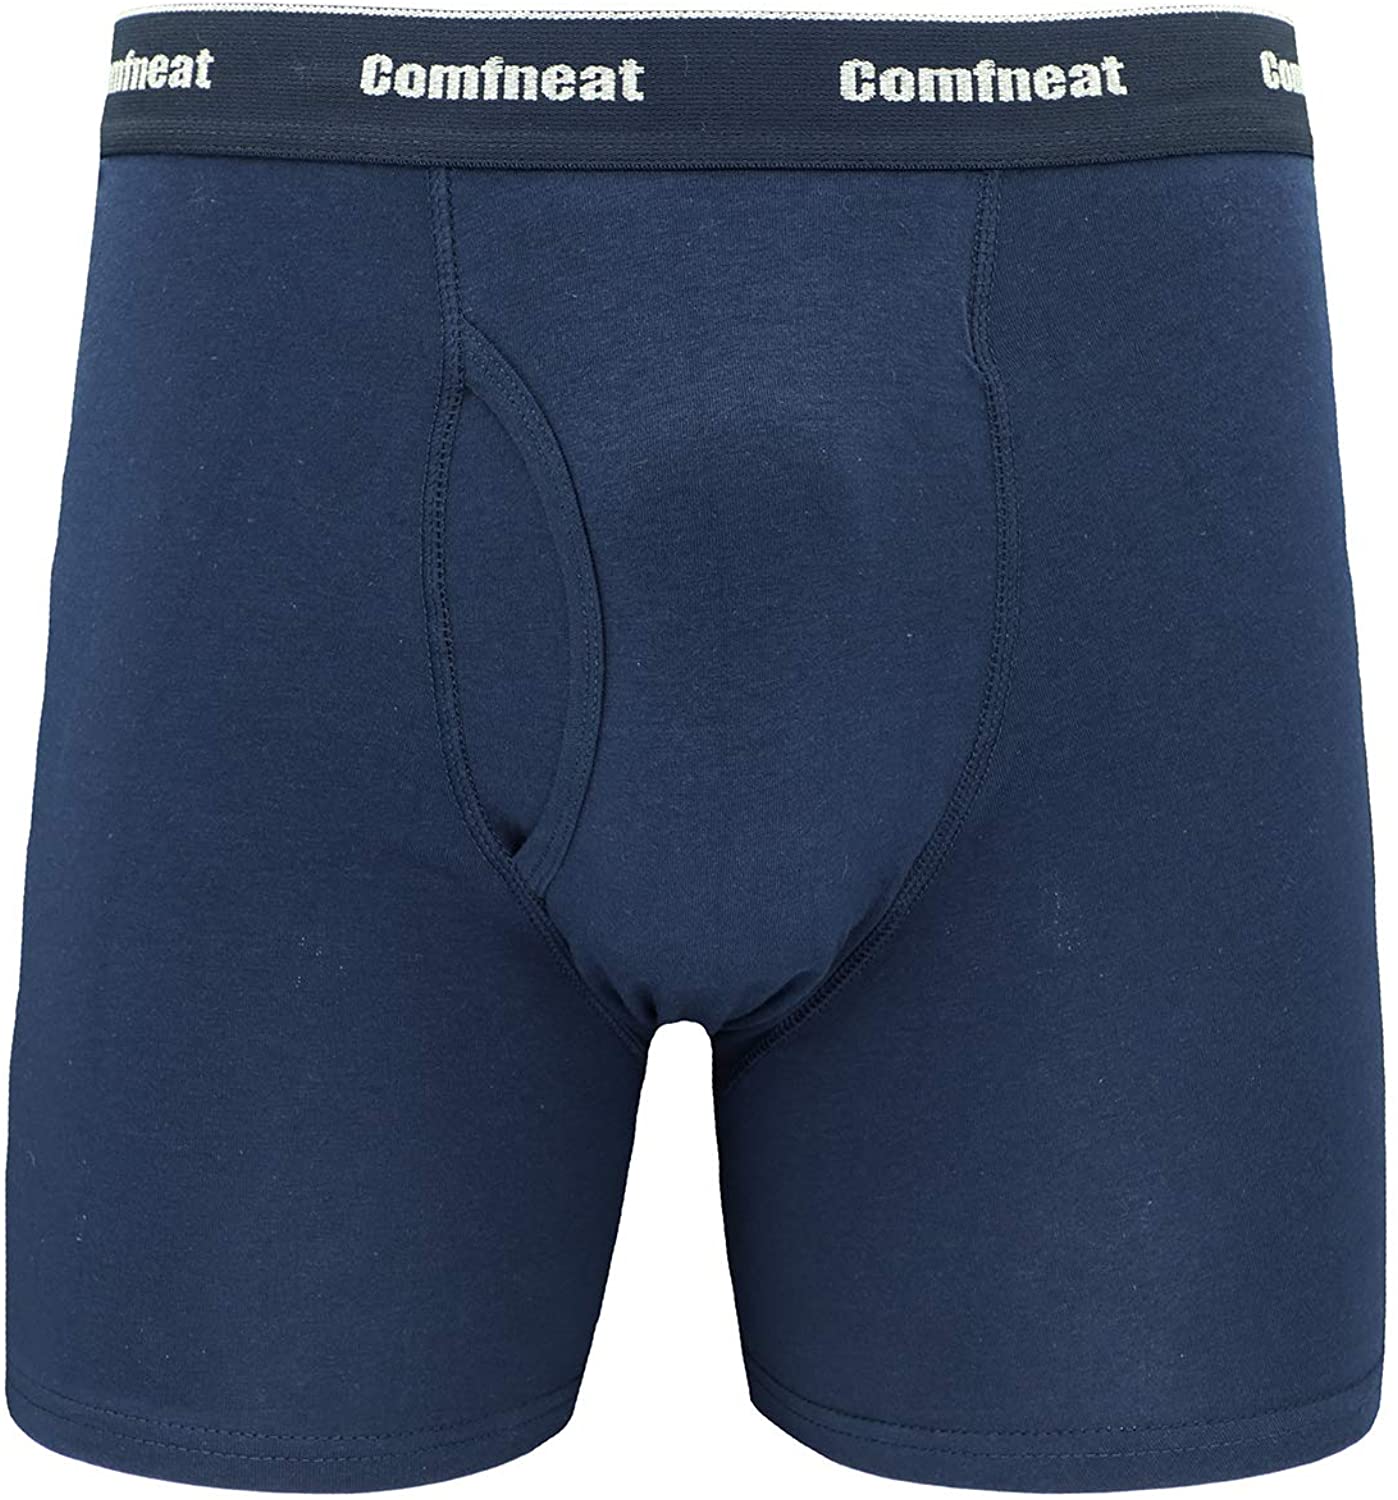 Comfneat Men's 6-Pack Boxer Briefs Cotton Spandex S-XXL Soft Tagless ...